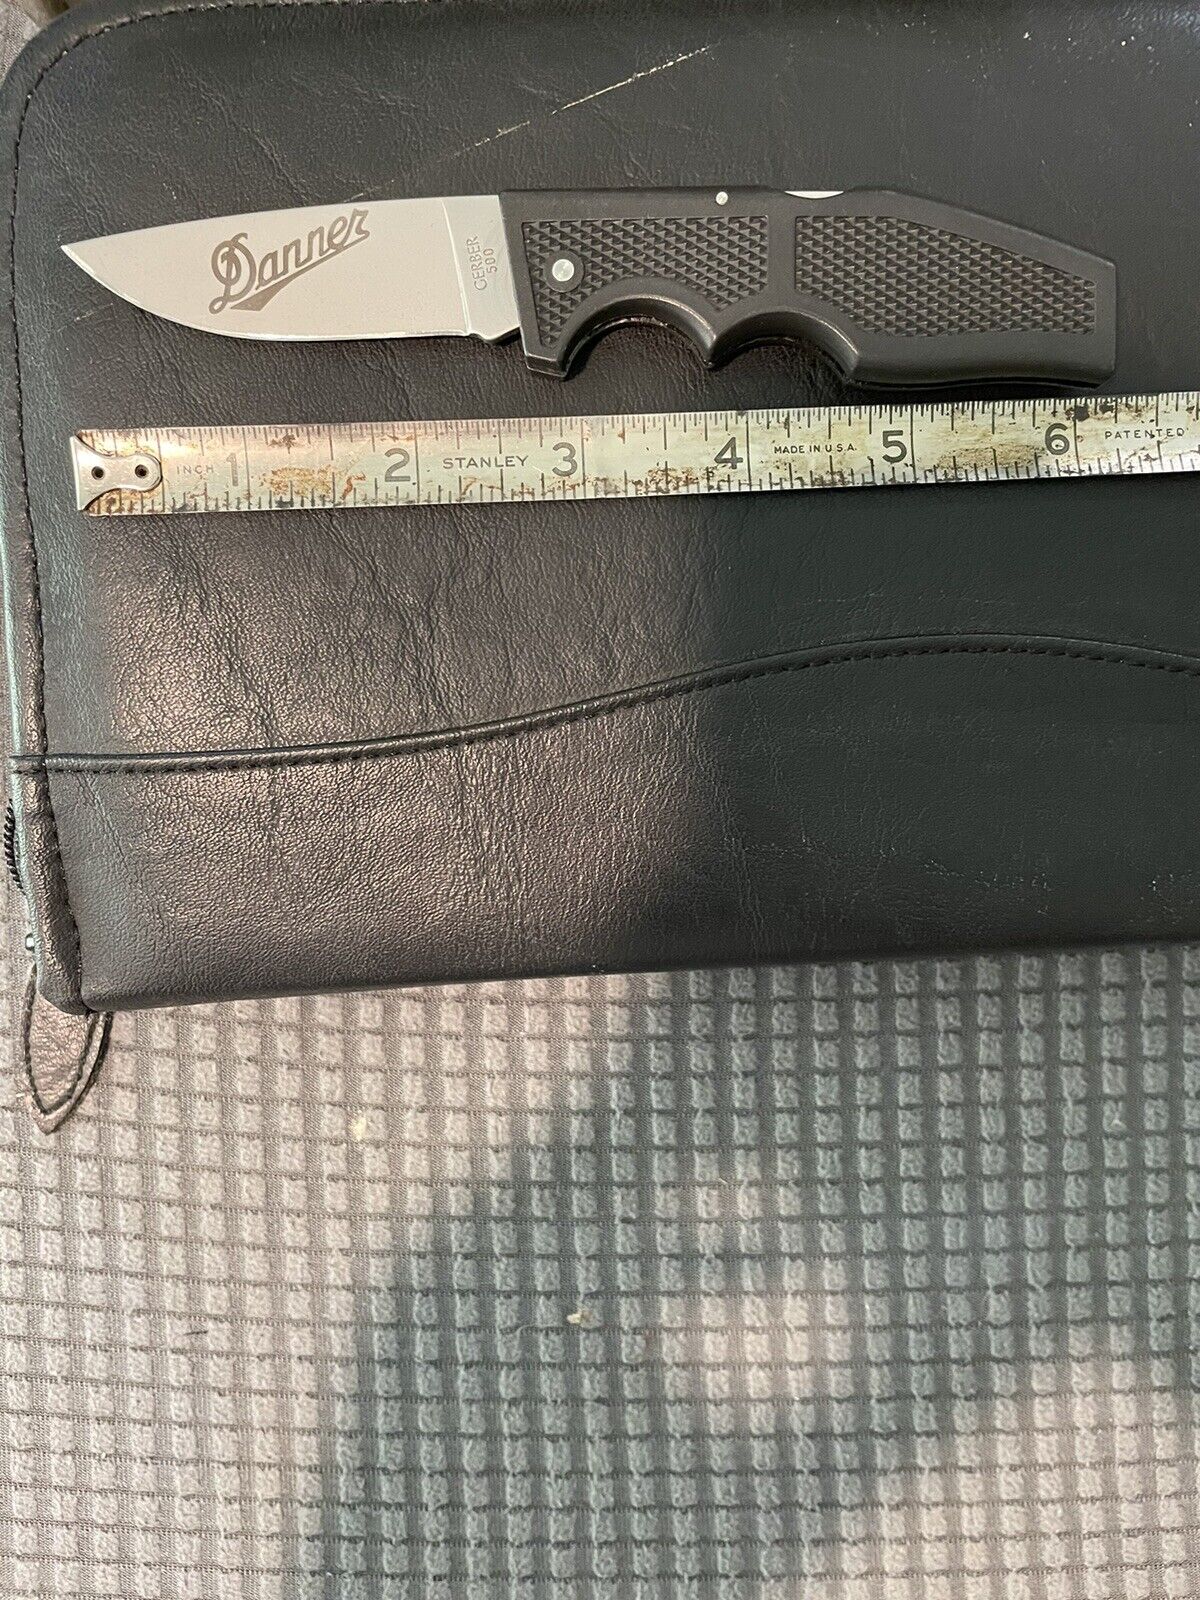 Gerber Magnum Jr 500 Pocket Knife Lockback Plain Edge Blade USA Danner